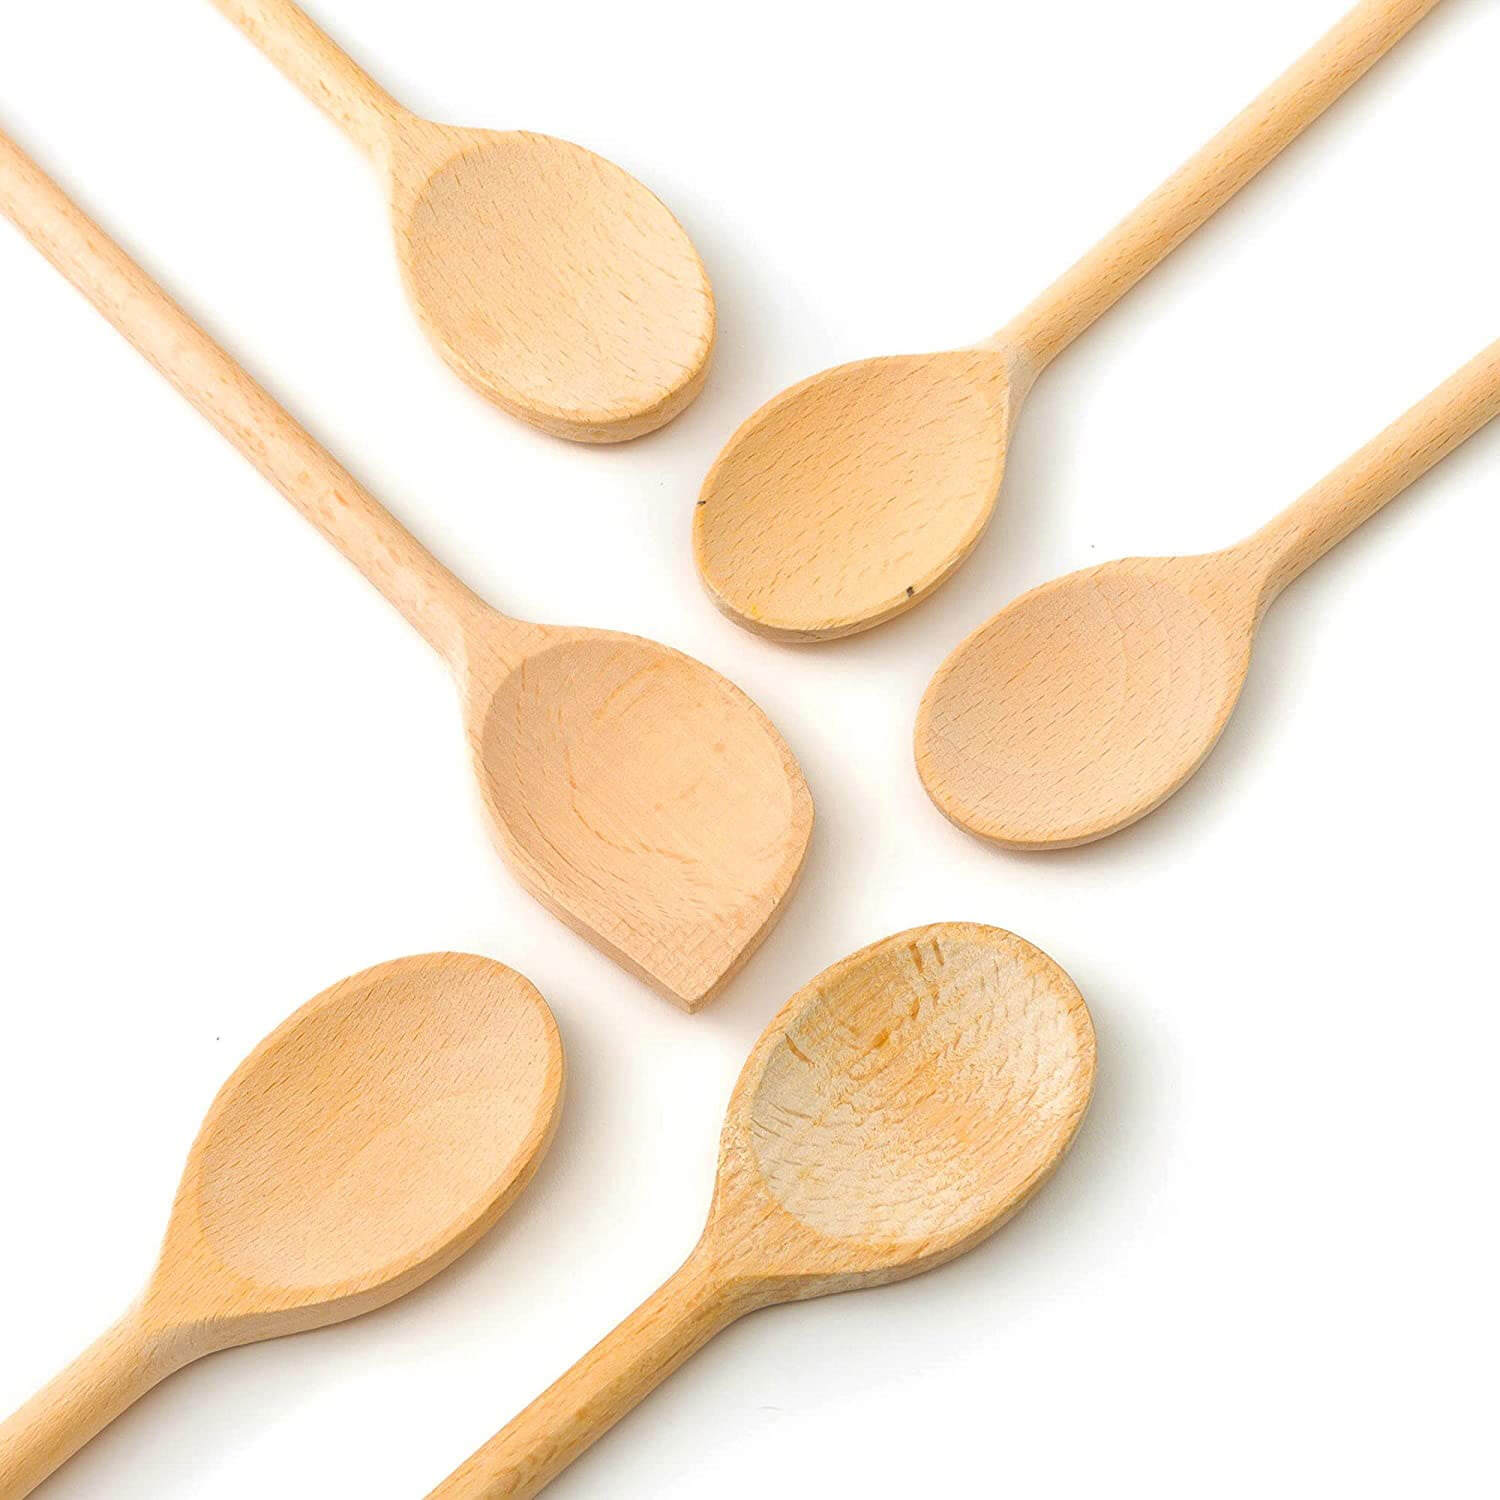 https://cdn.shopify.com/s/files/1/0515/2440/3381/products/6-piece-wooden-kitchen-spoon-set-20cm-35cm-tuuli-600.jpg